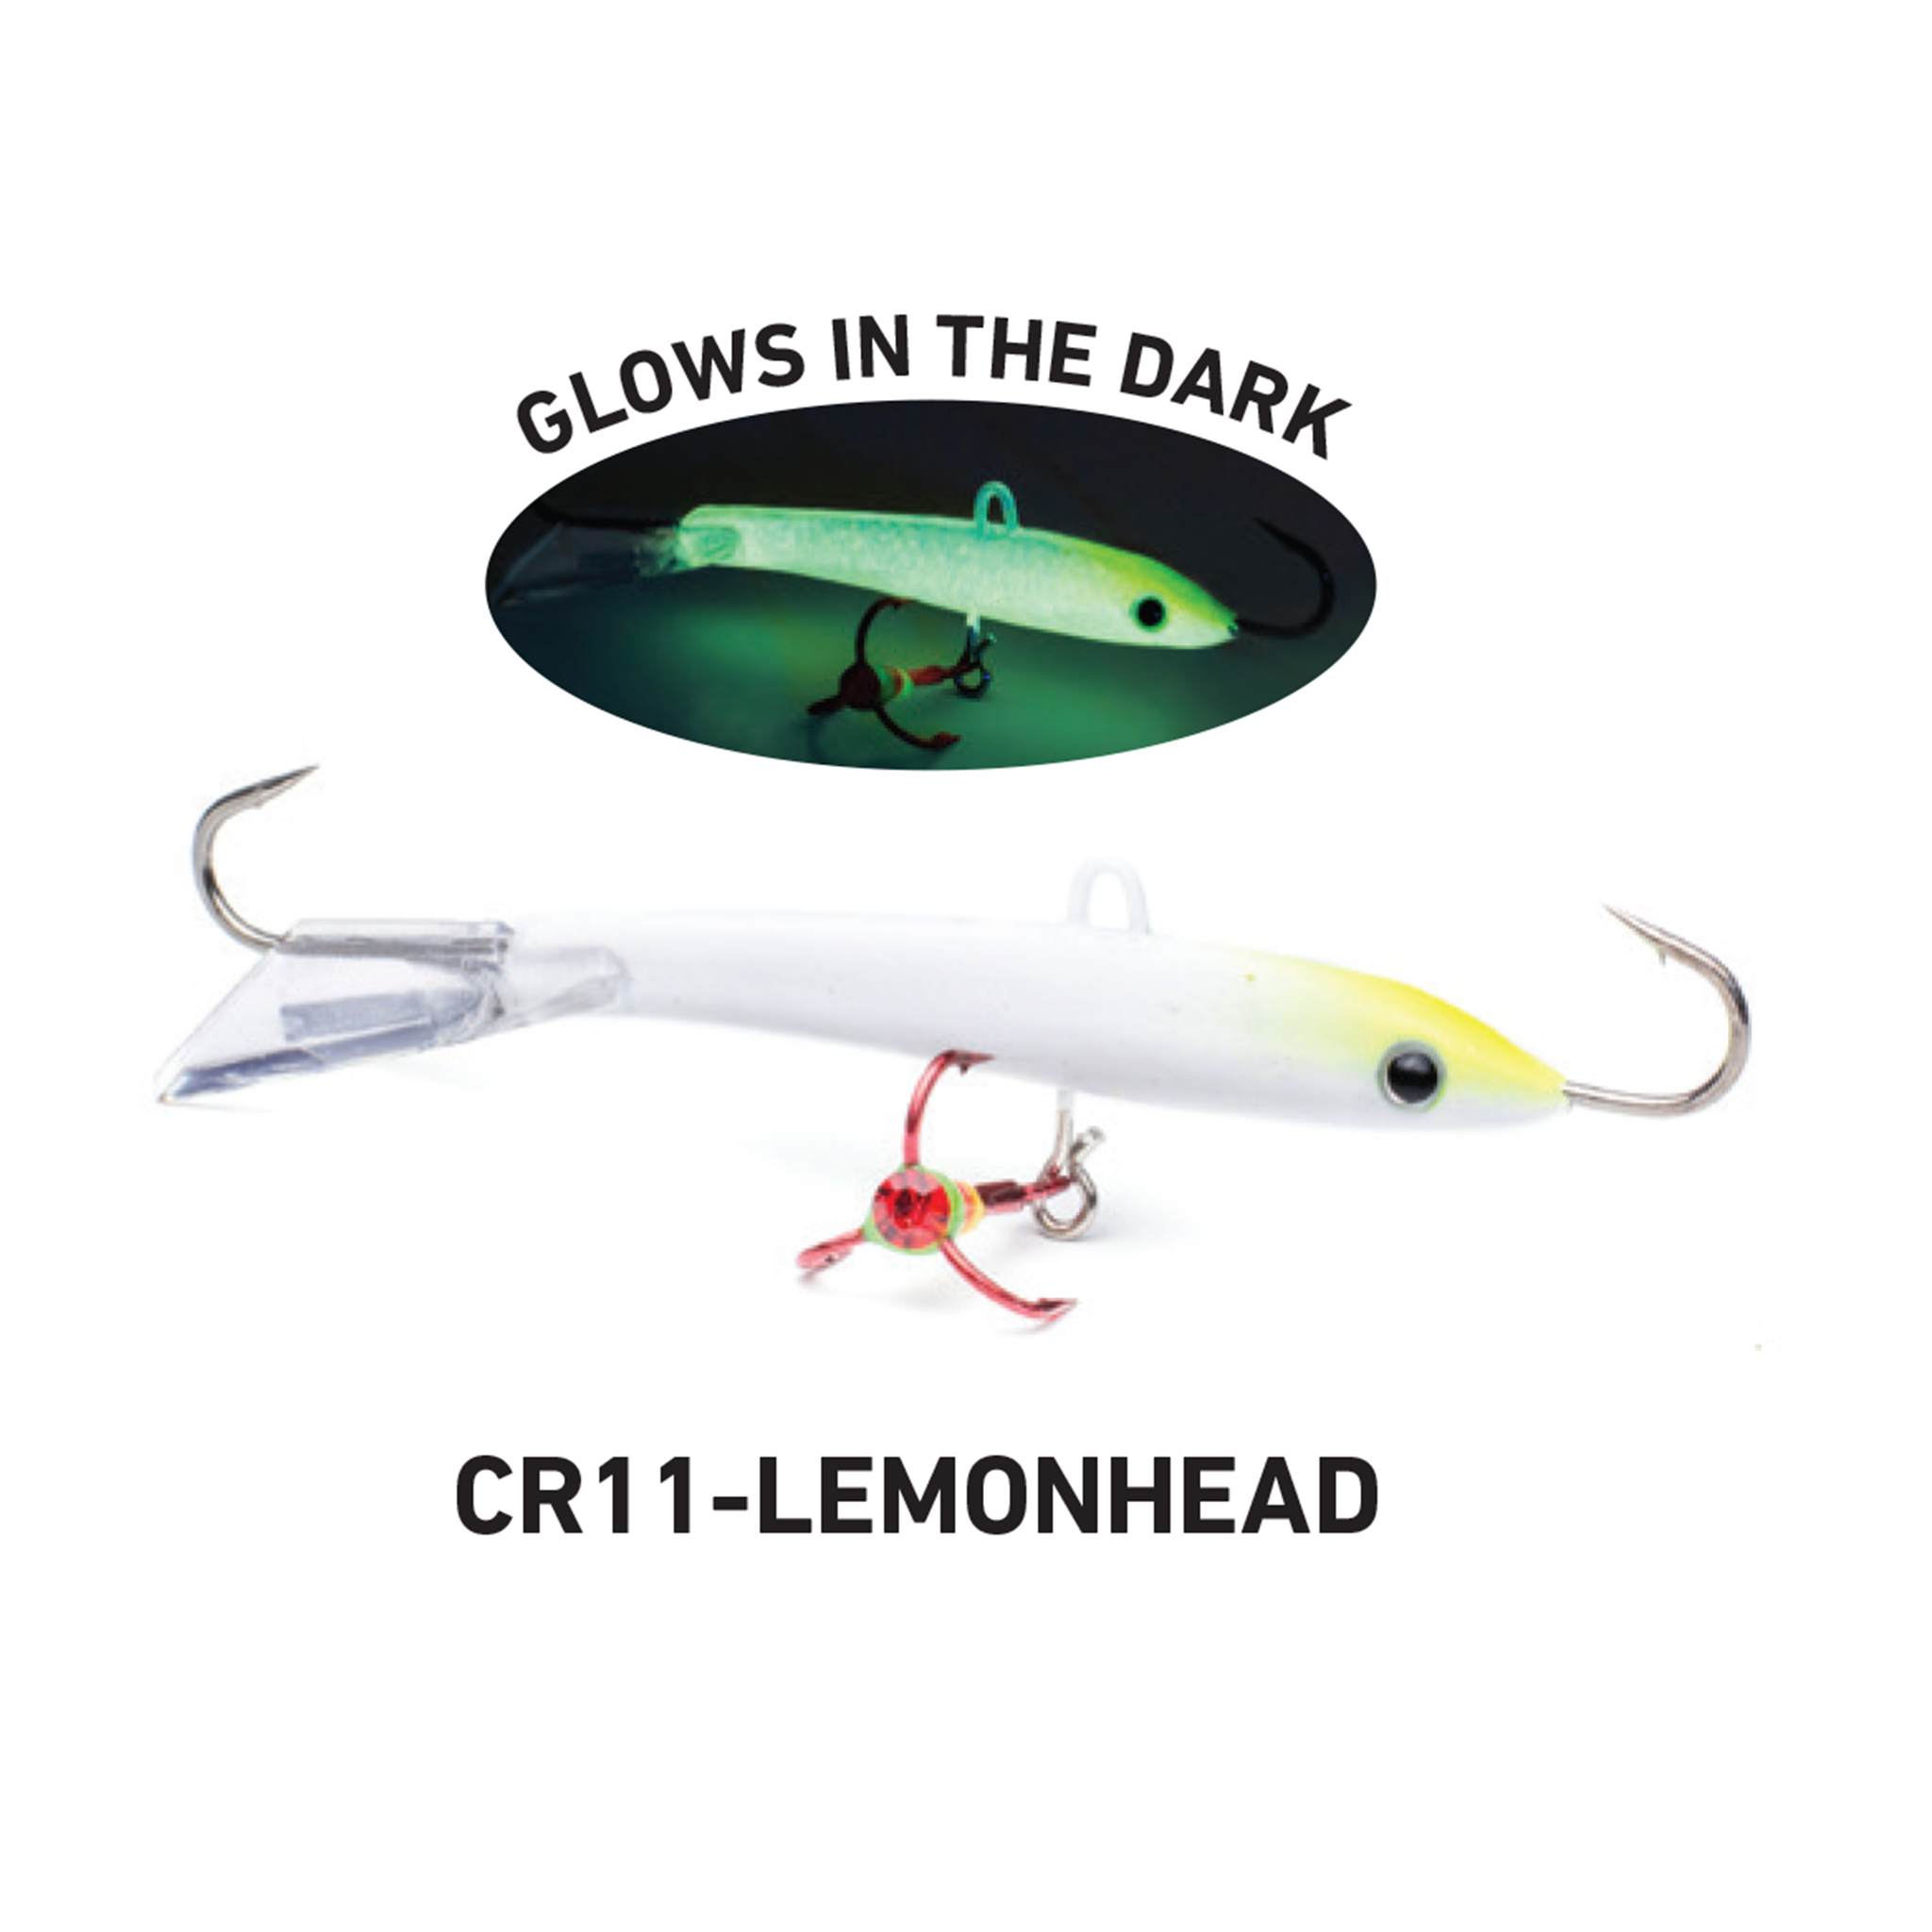 CR 11-Lemonhead – Big Eye Spinnerbaits